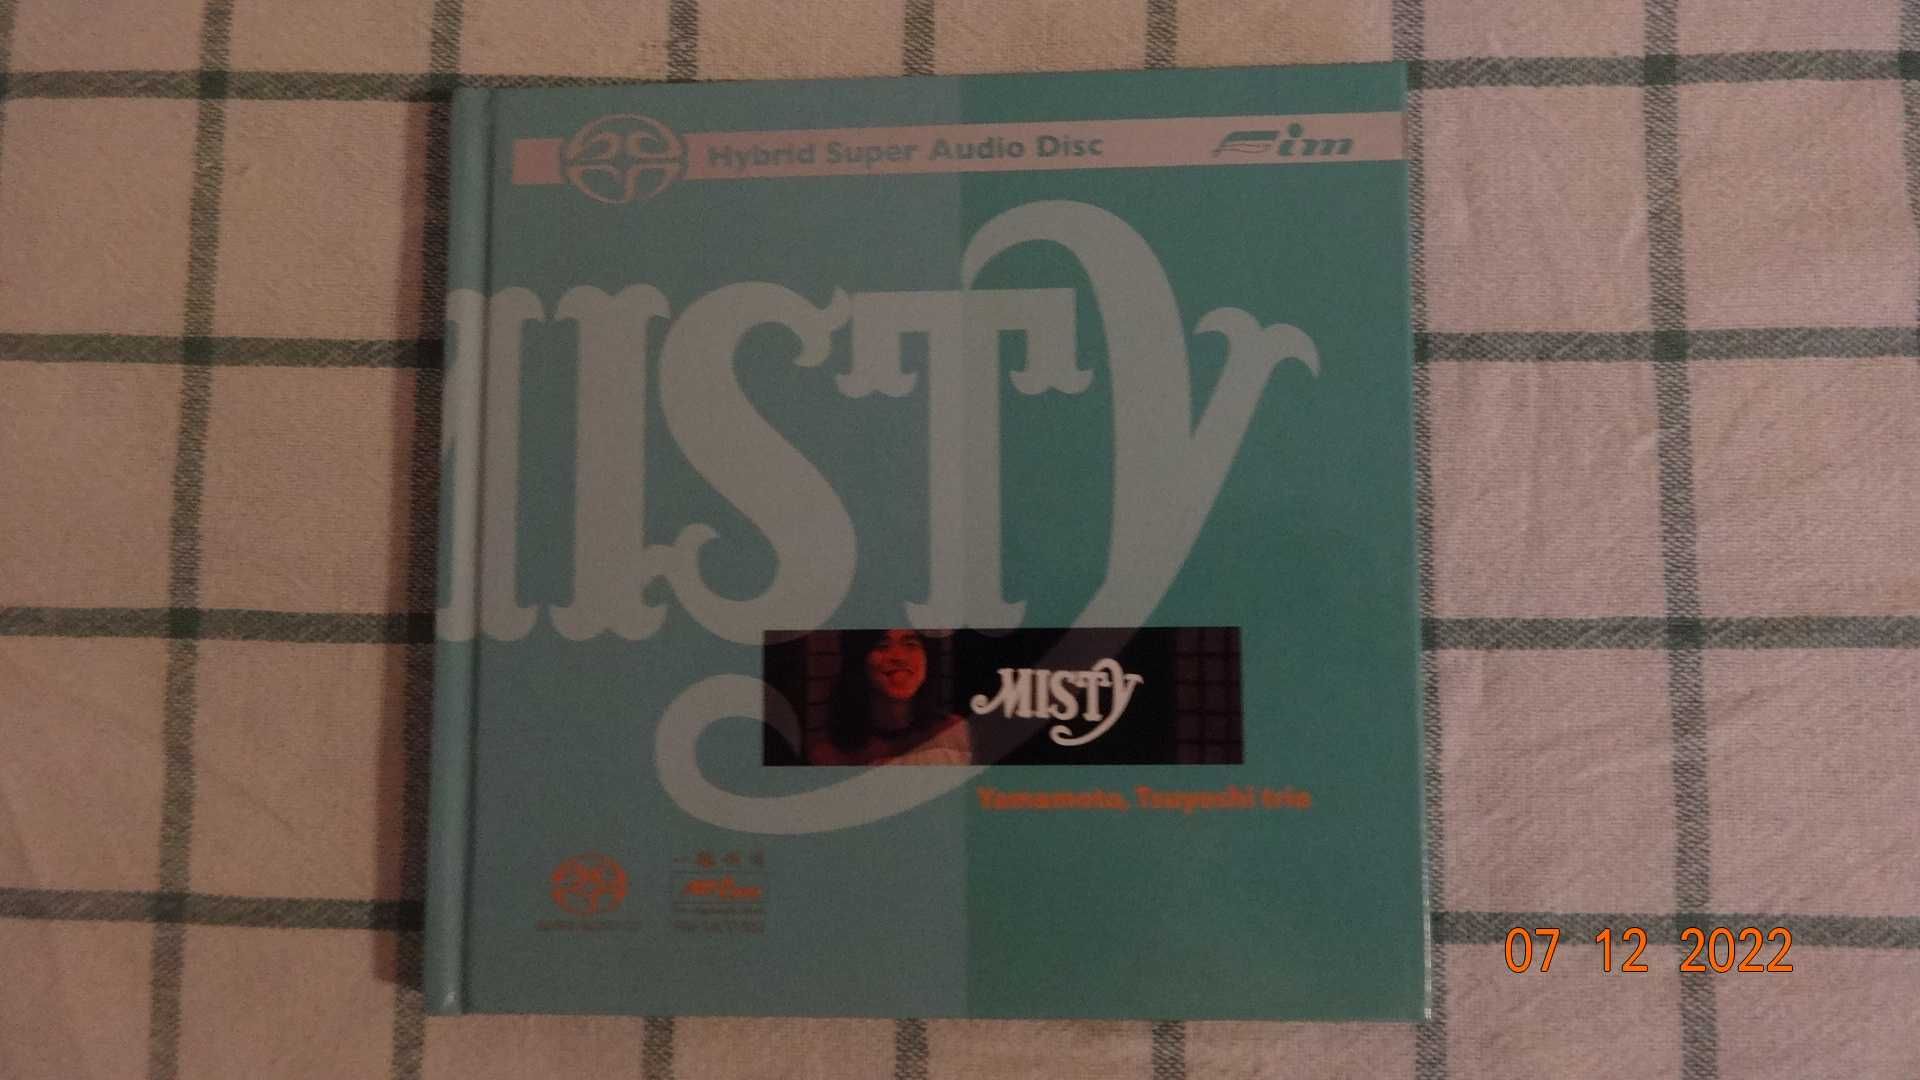 Maxell XL2 90 kasety z muzyka T.Yamamoto "Misty" REFERENCE